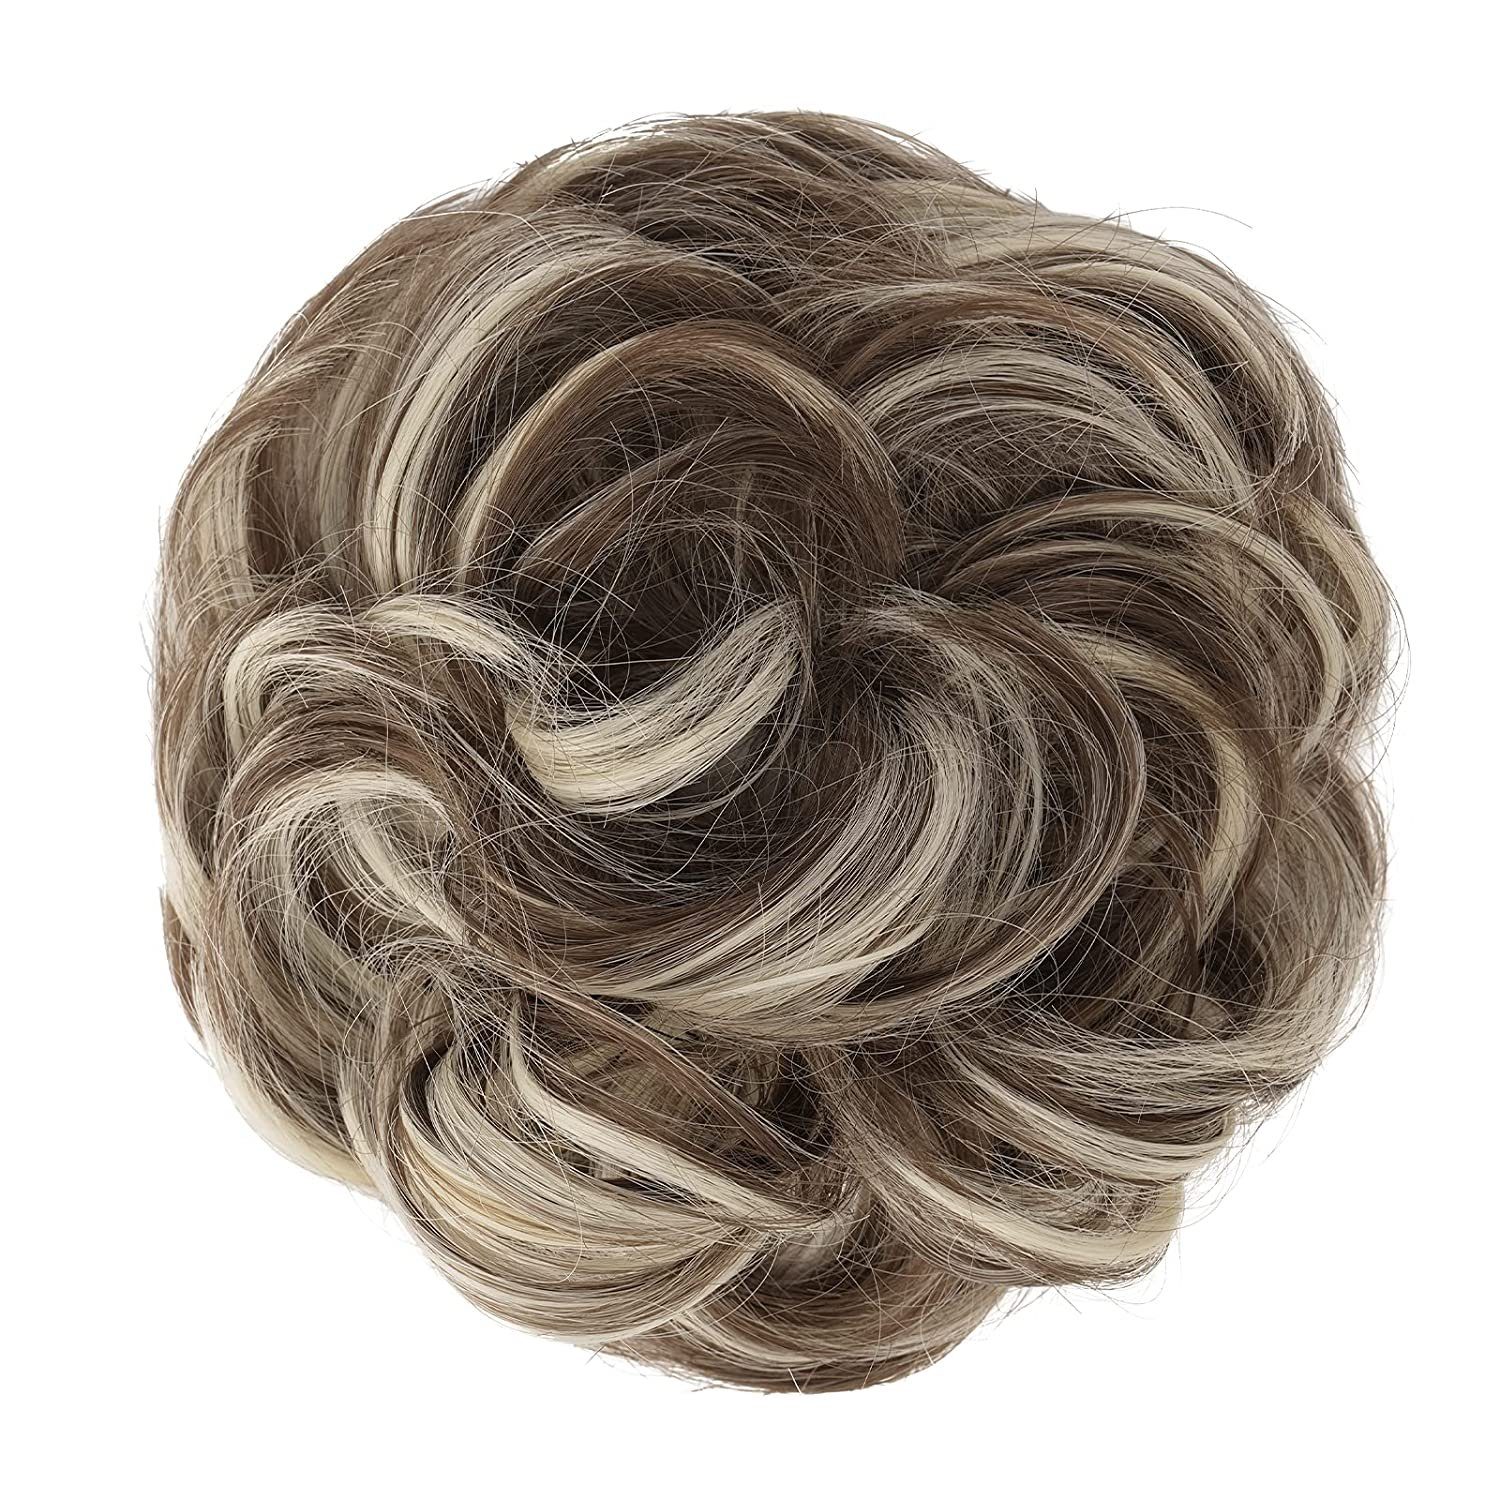 Dutt Gewellt Haarverlängerung Püke Golden Blonde Frauen für Haarknoten Pferdeschwanz Brown Bleach Kunsthaar-Extension